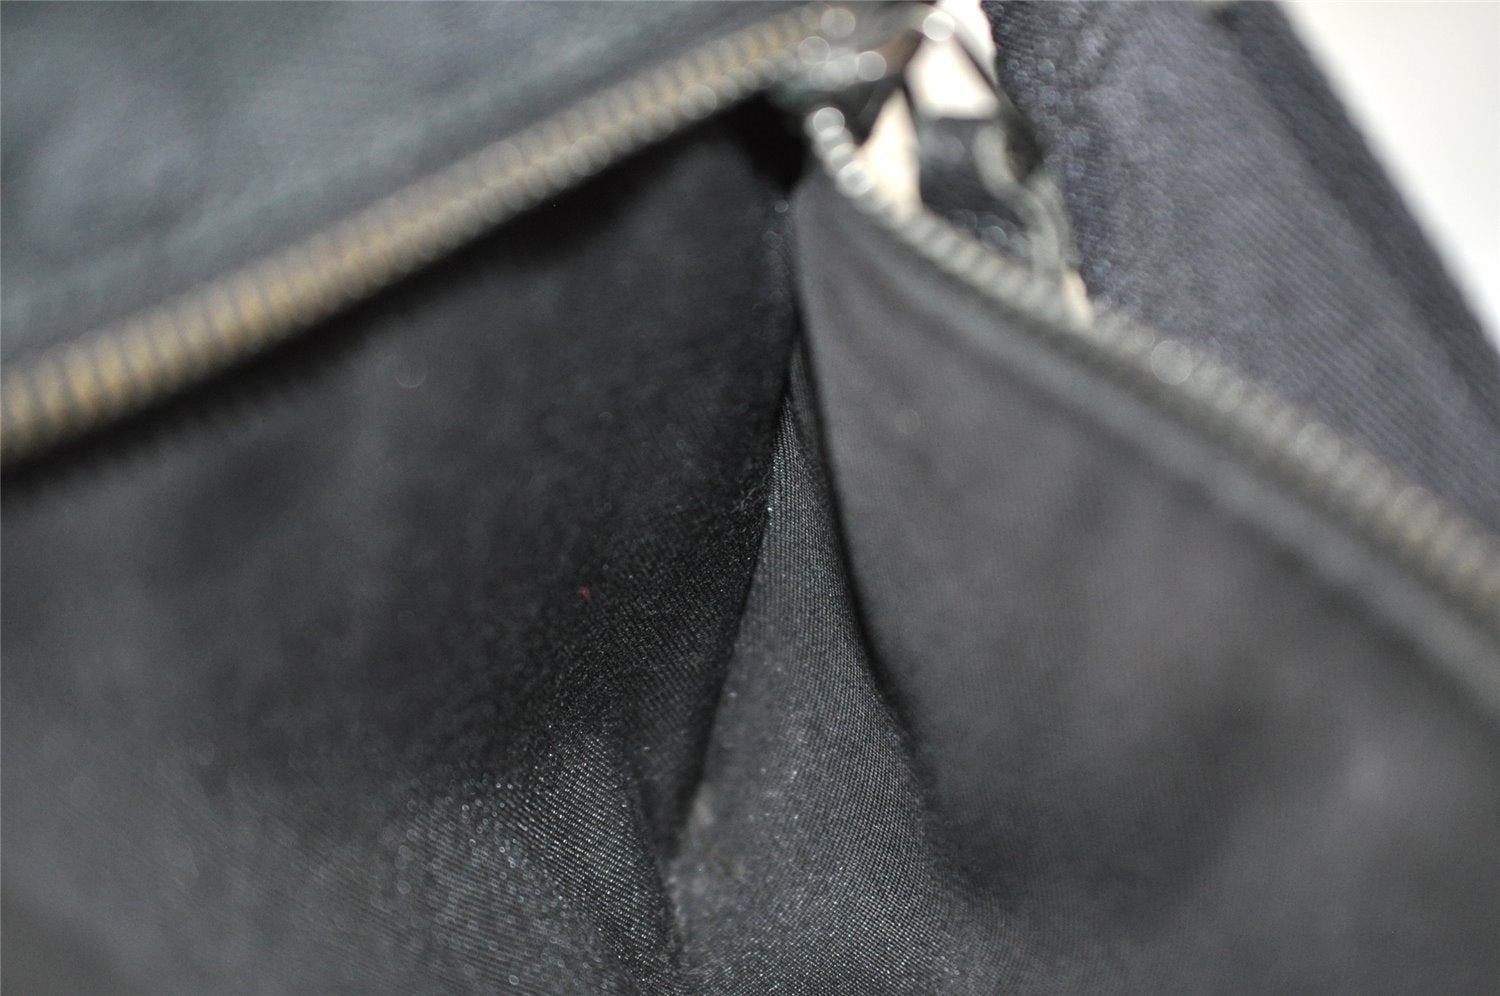 Authentic GUCCI Waist Body Bag Purse GG Canvas Leather 28566 Black 2788I